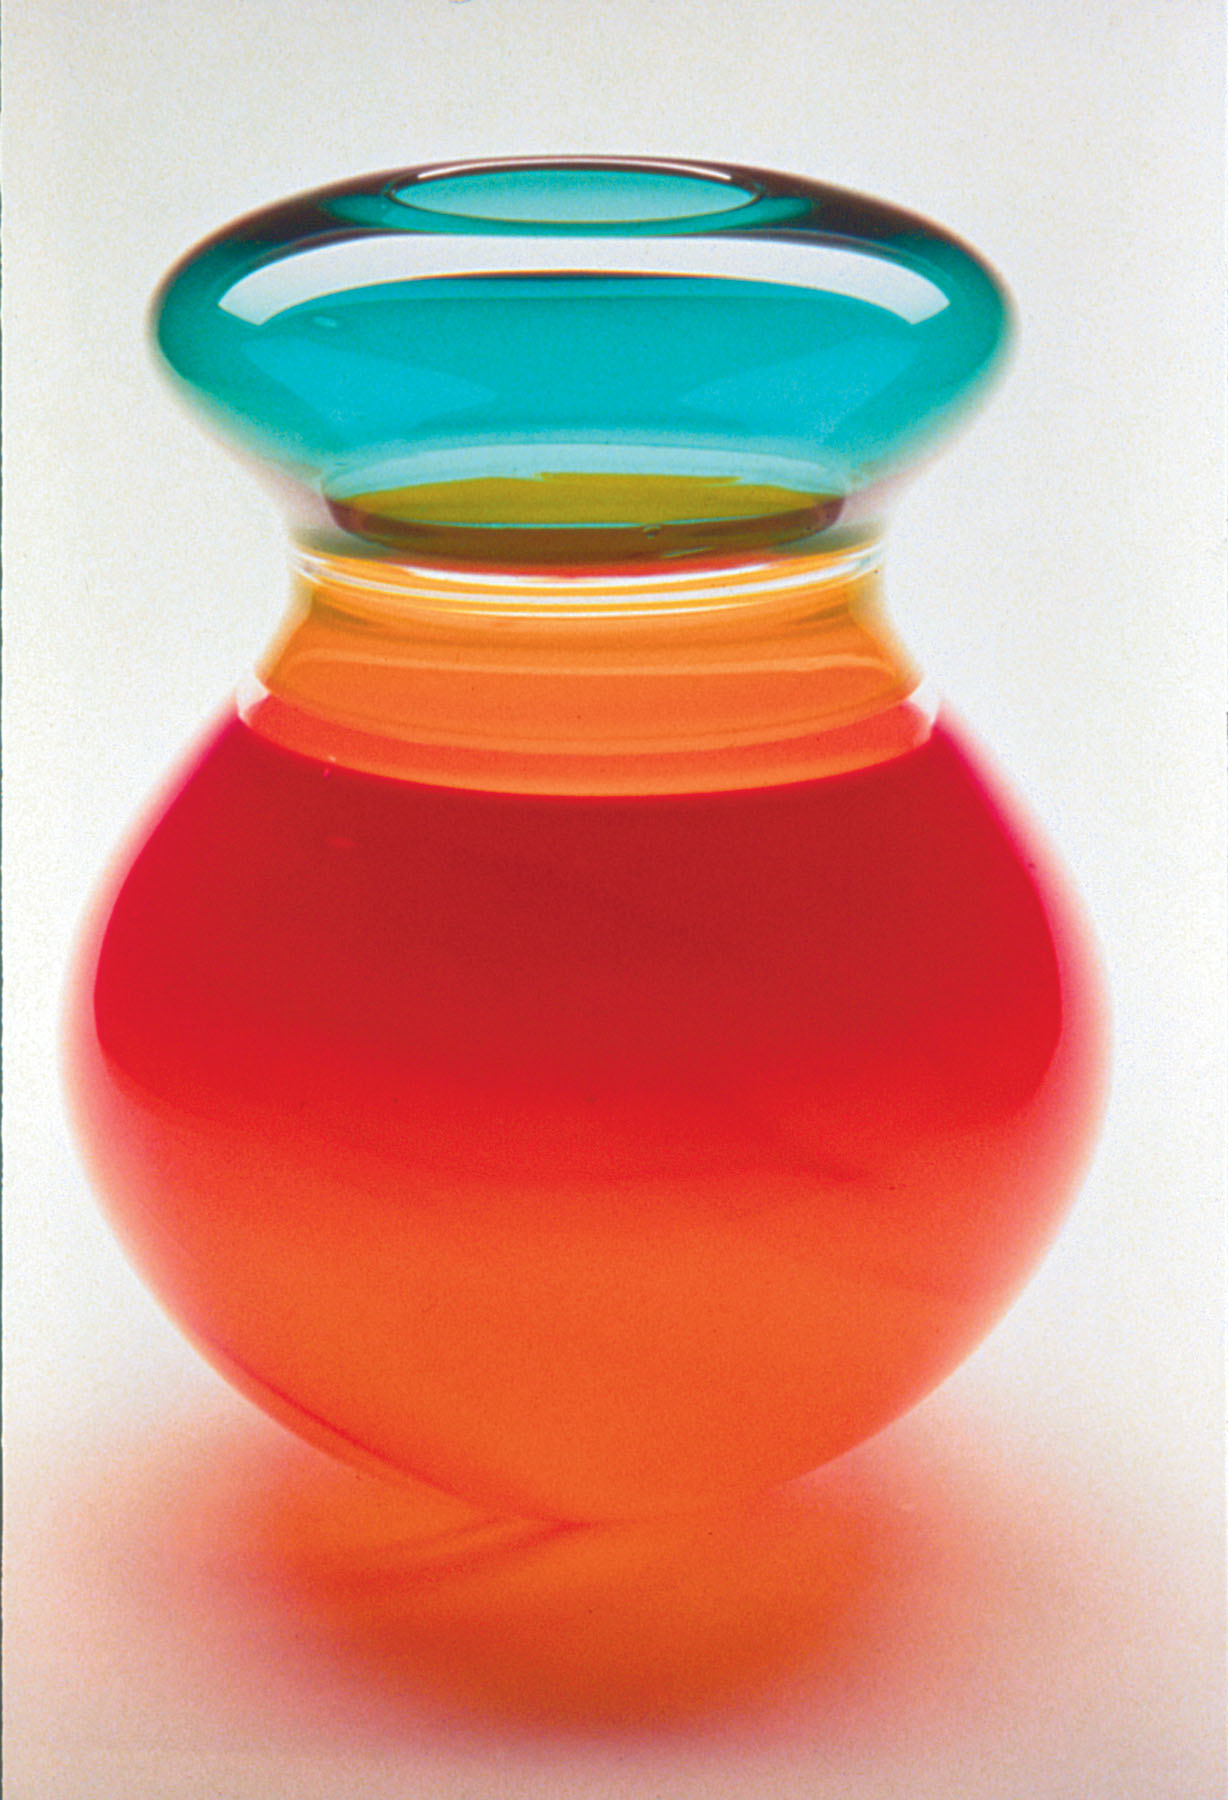 https://www.ramart.org/wp-content/uploads/permanent-collection/glass/Blomdahl-1993.24-Red-Yellow-Green-Vessel-1.jpg